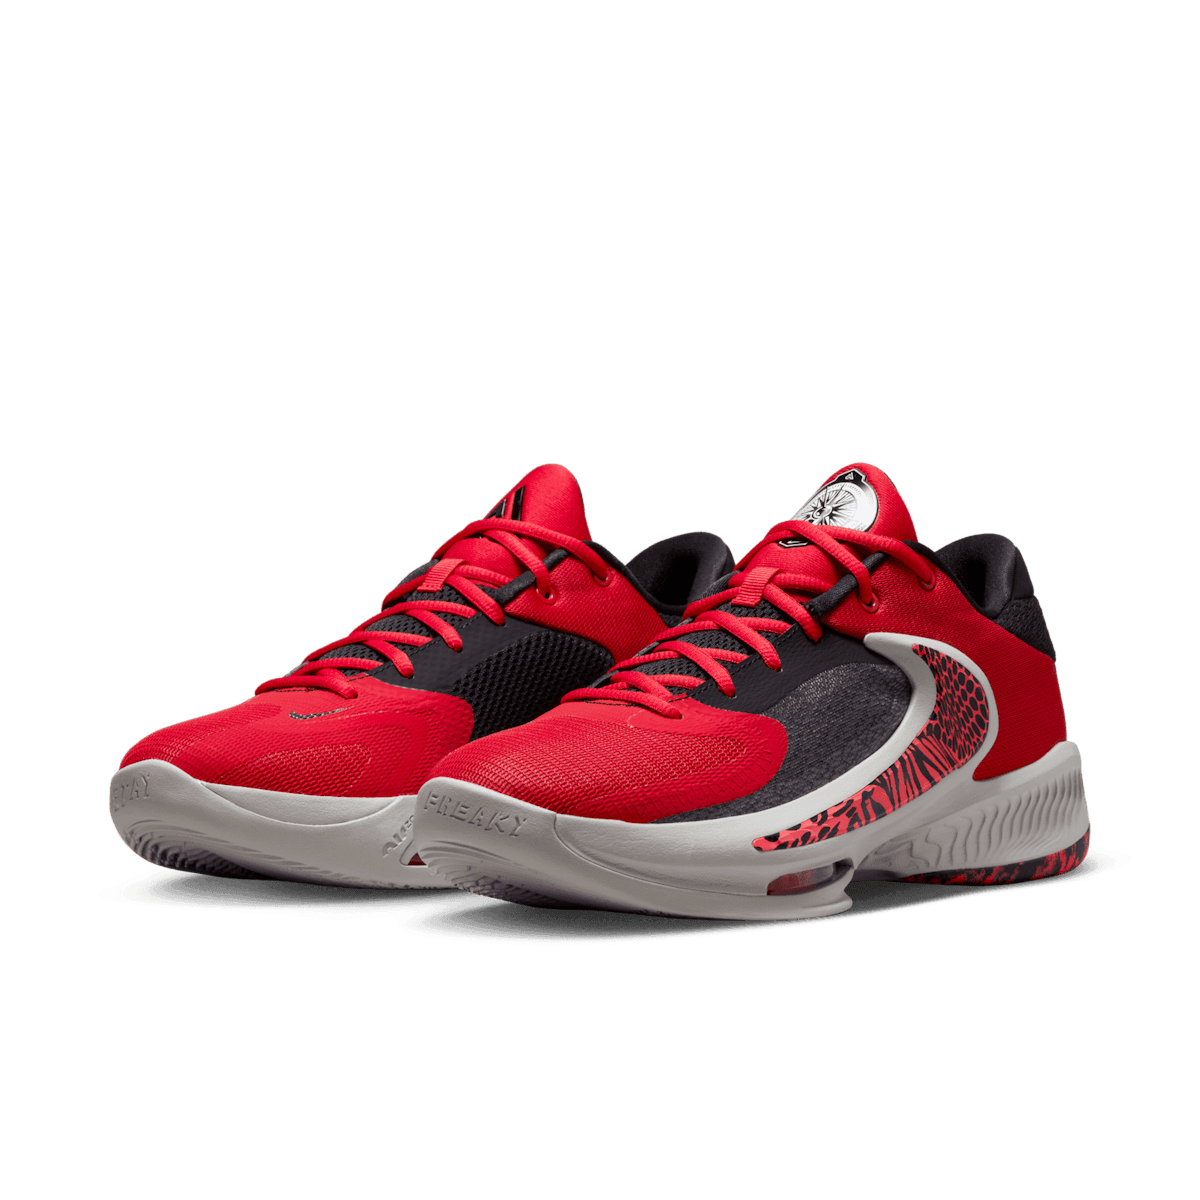 Nike Zoom Freak 4 "Safari" Basketball Shoes in Red Angle 2